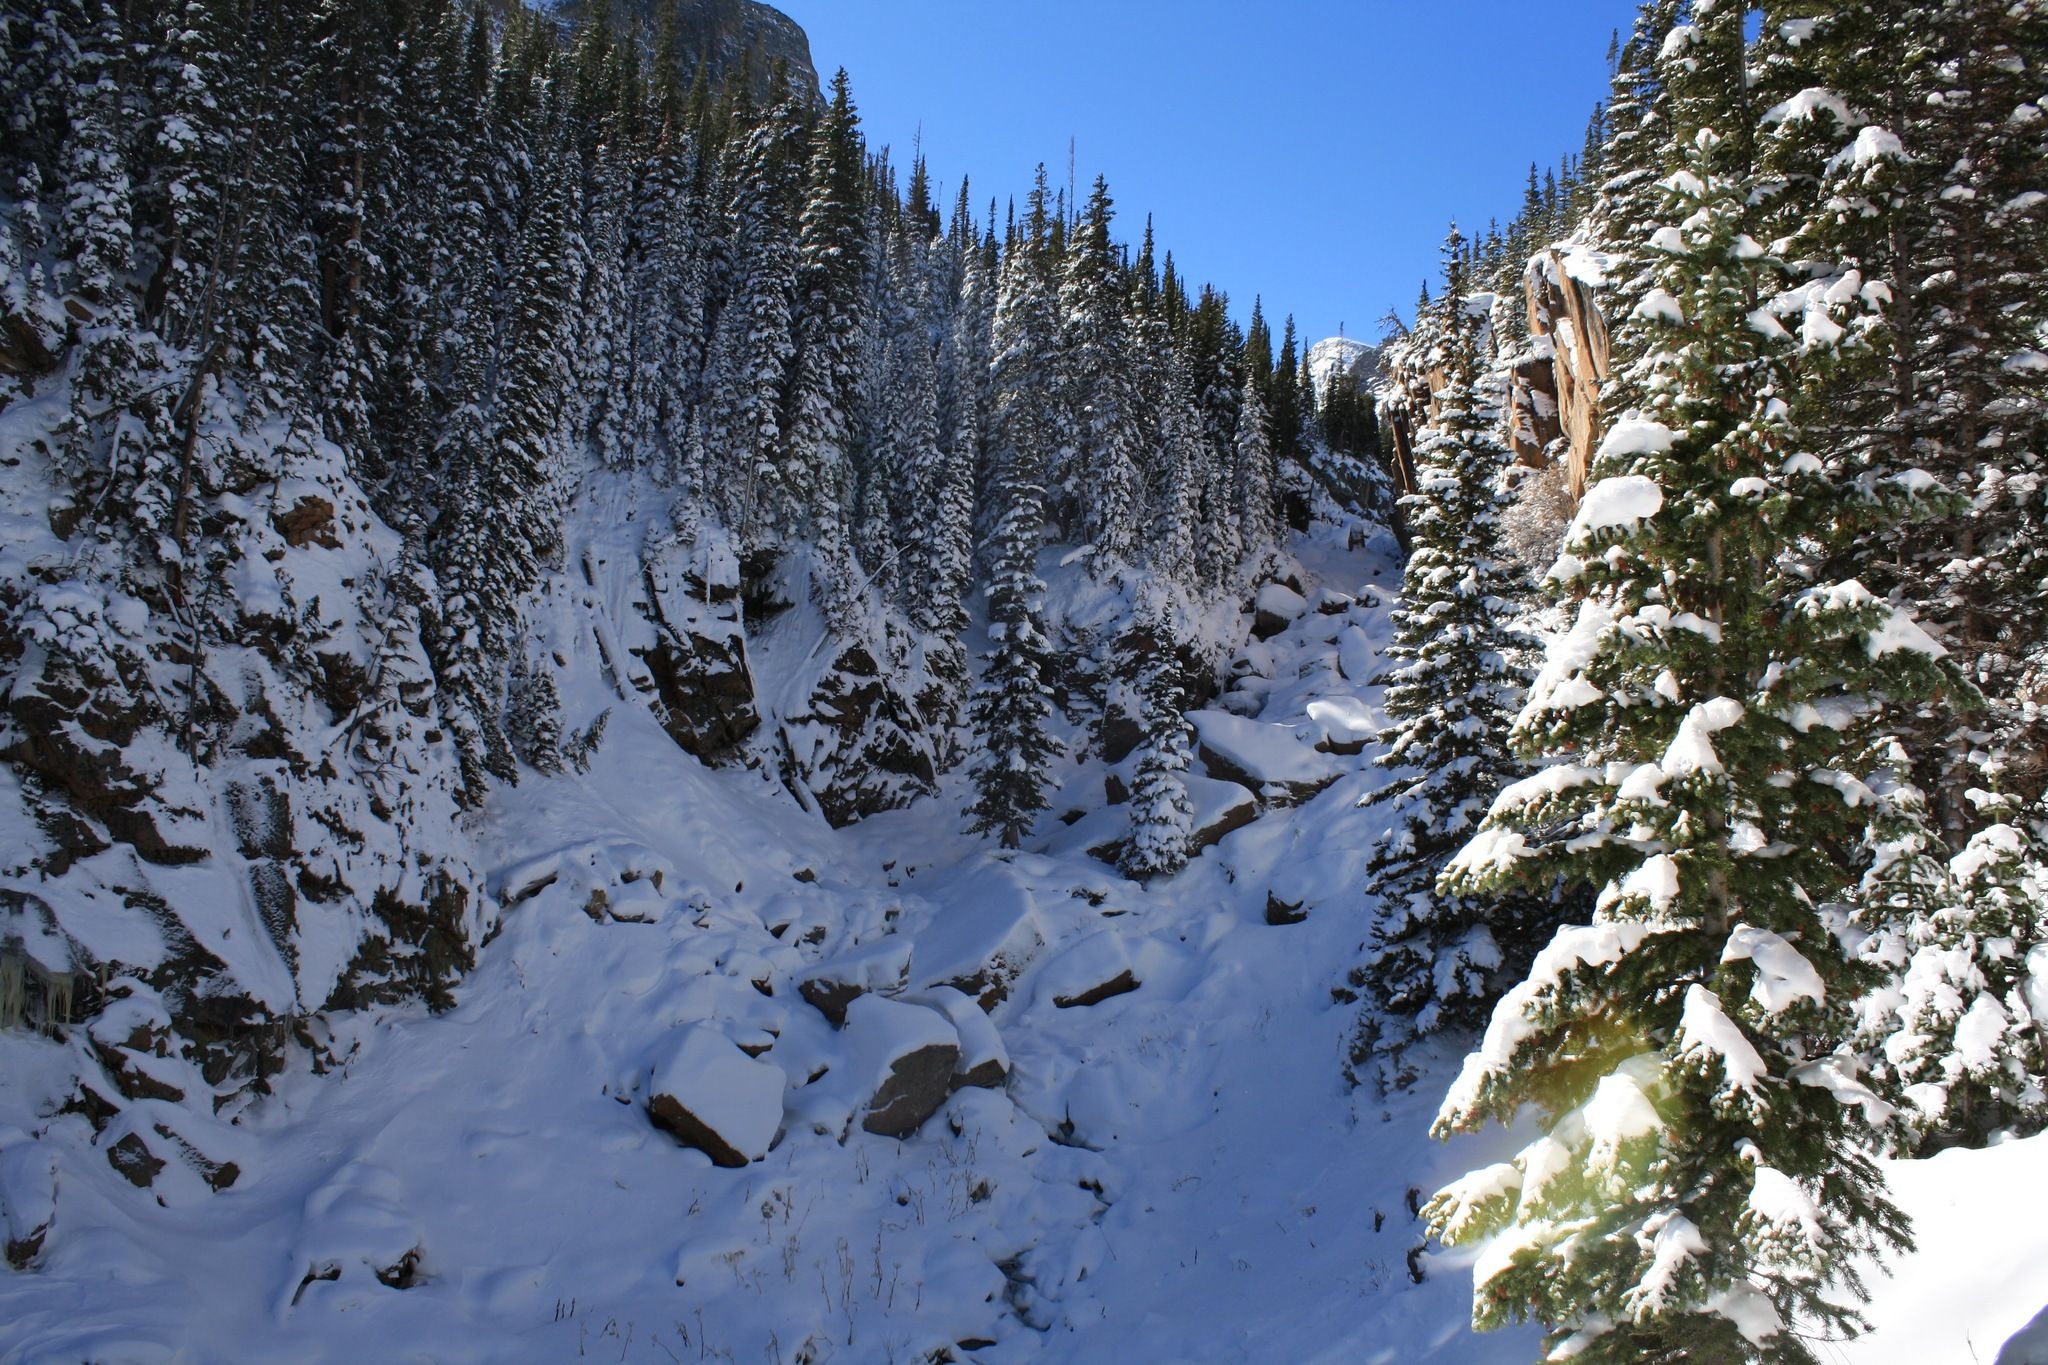 Alberta Falls, Rocky Mountain National Park, hikes, winter